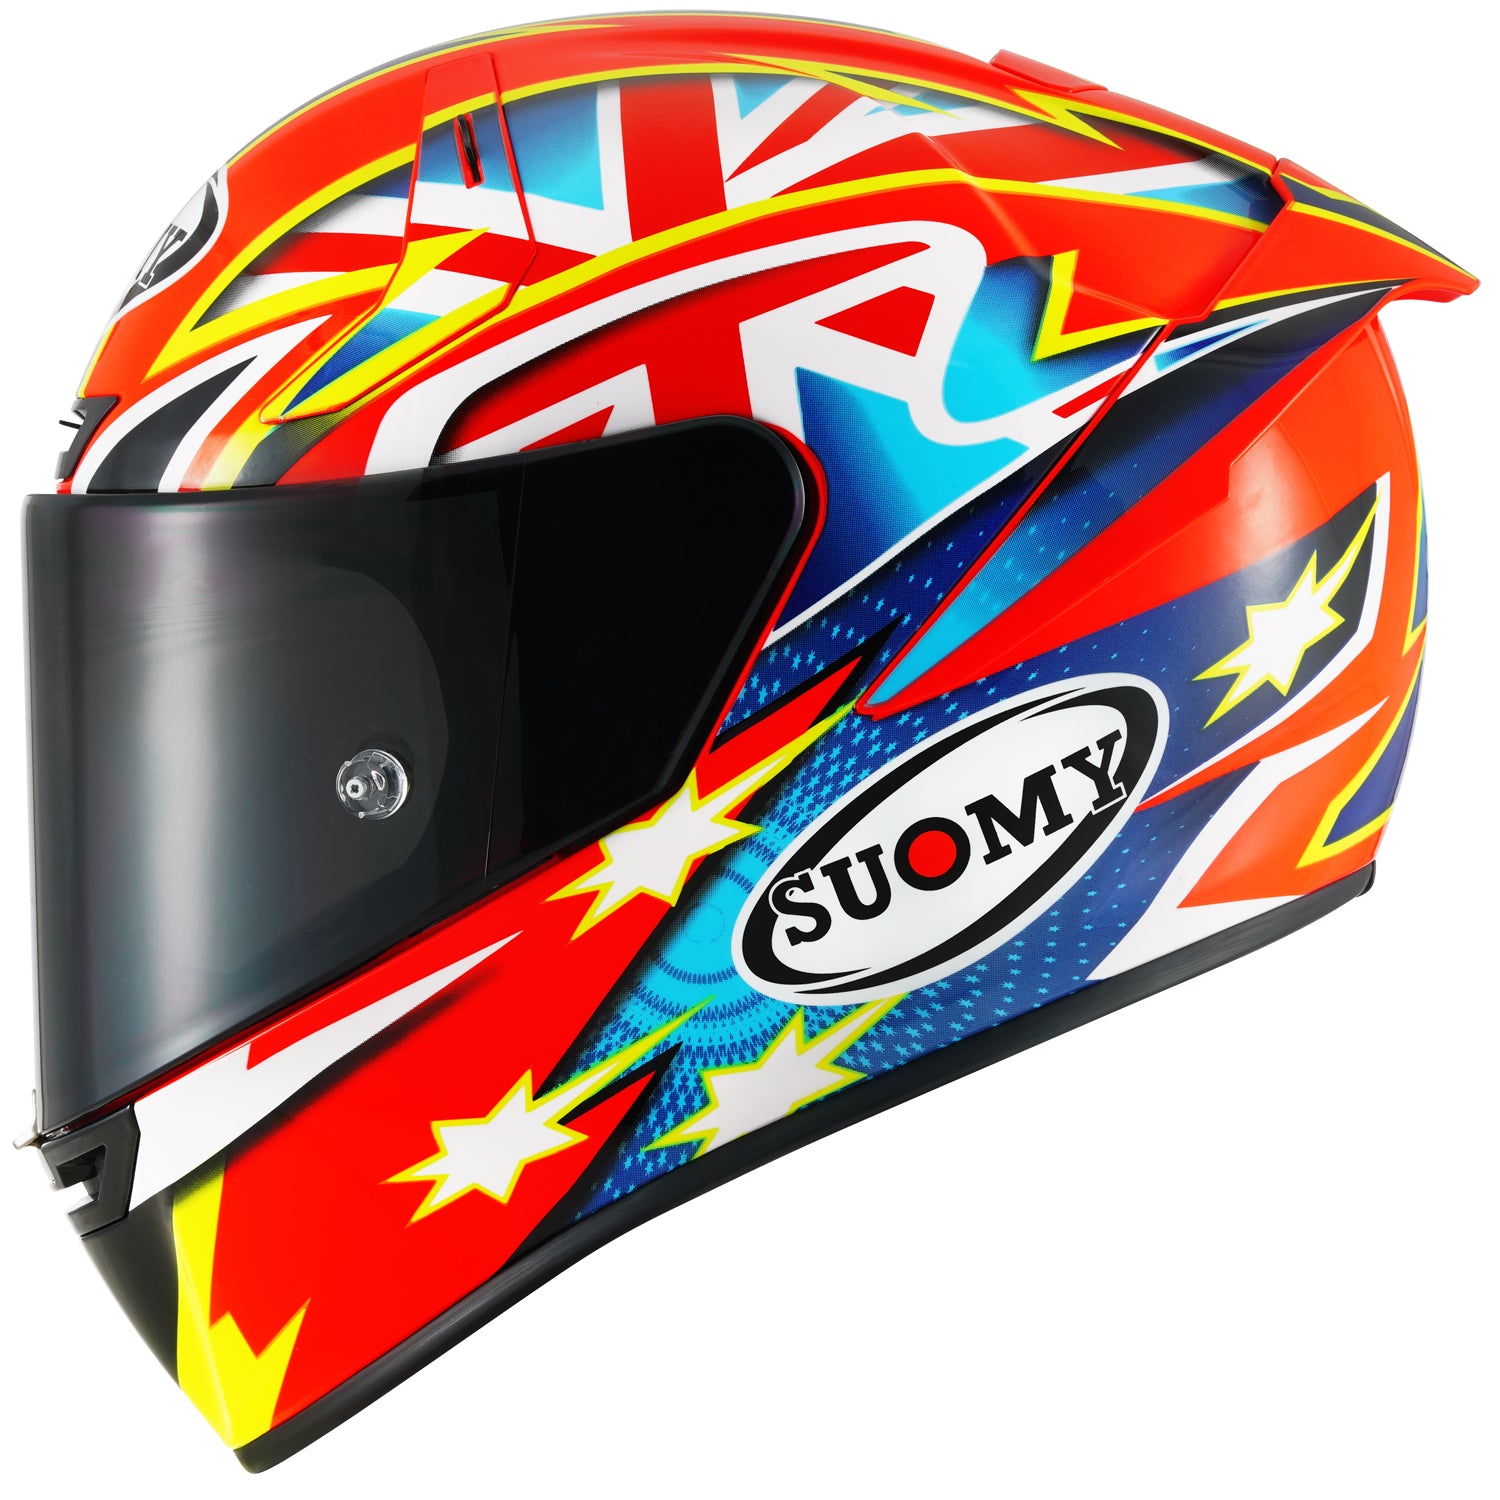 Suomy SR-GP Fullspeed Helmet